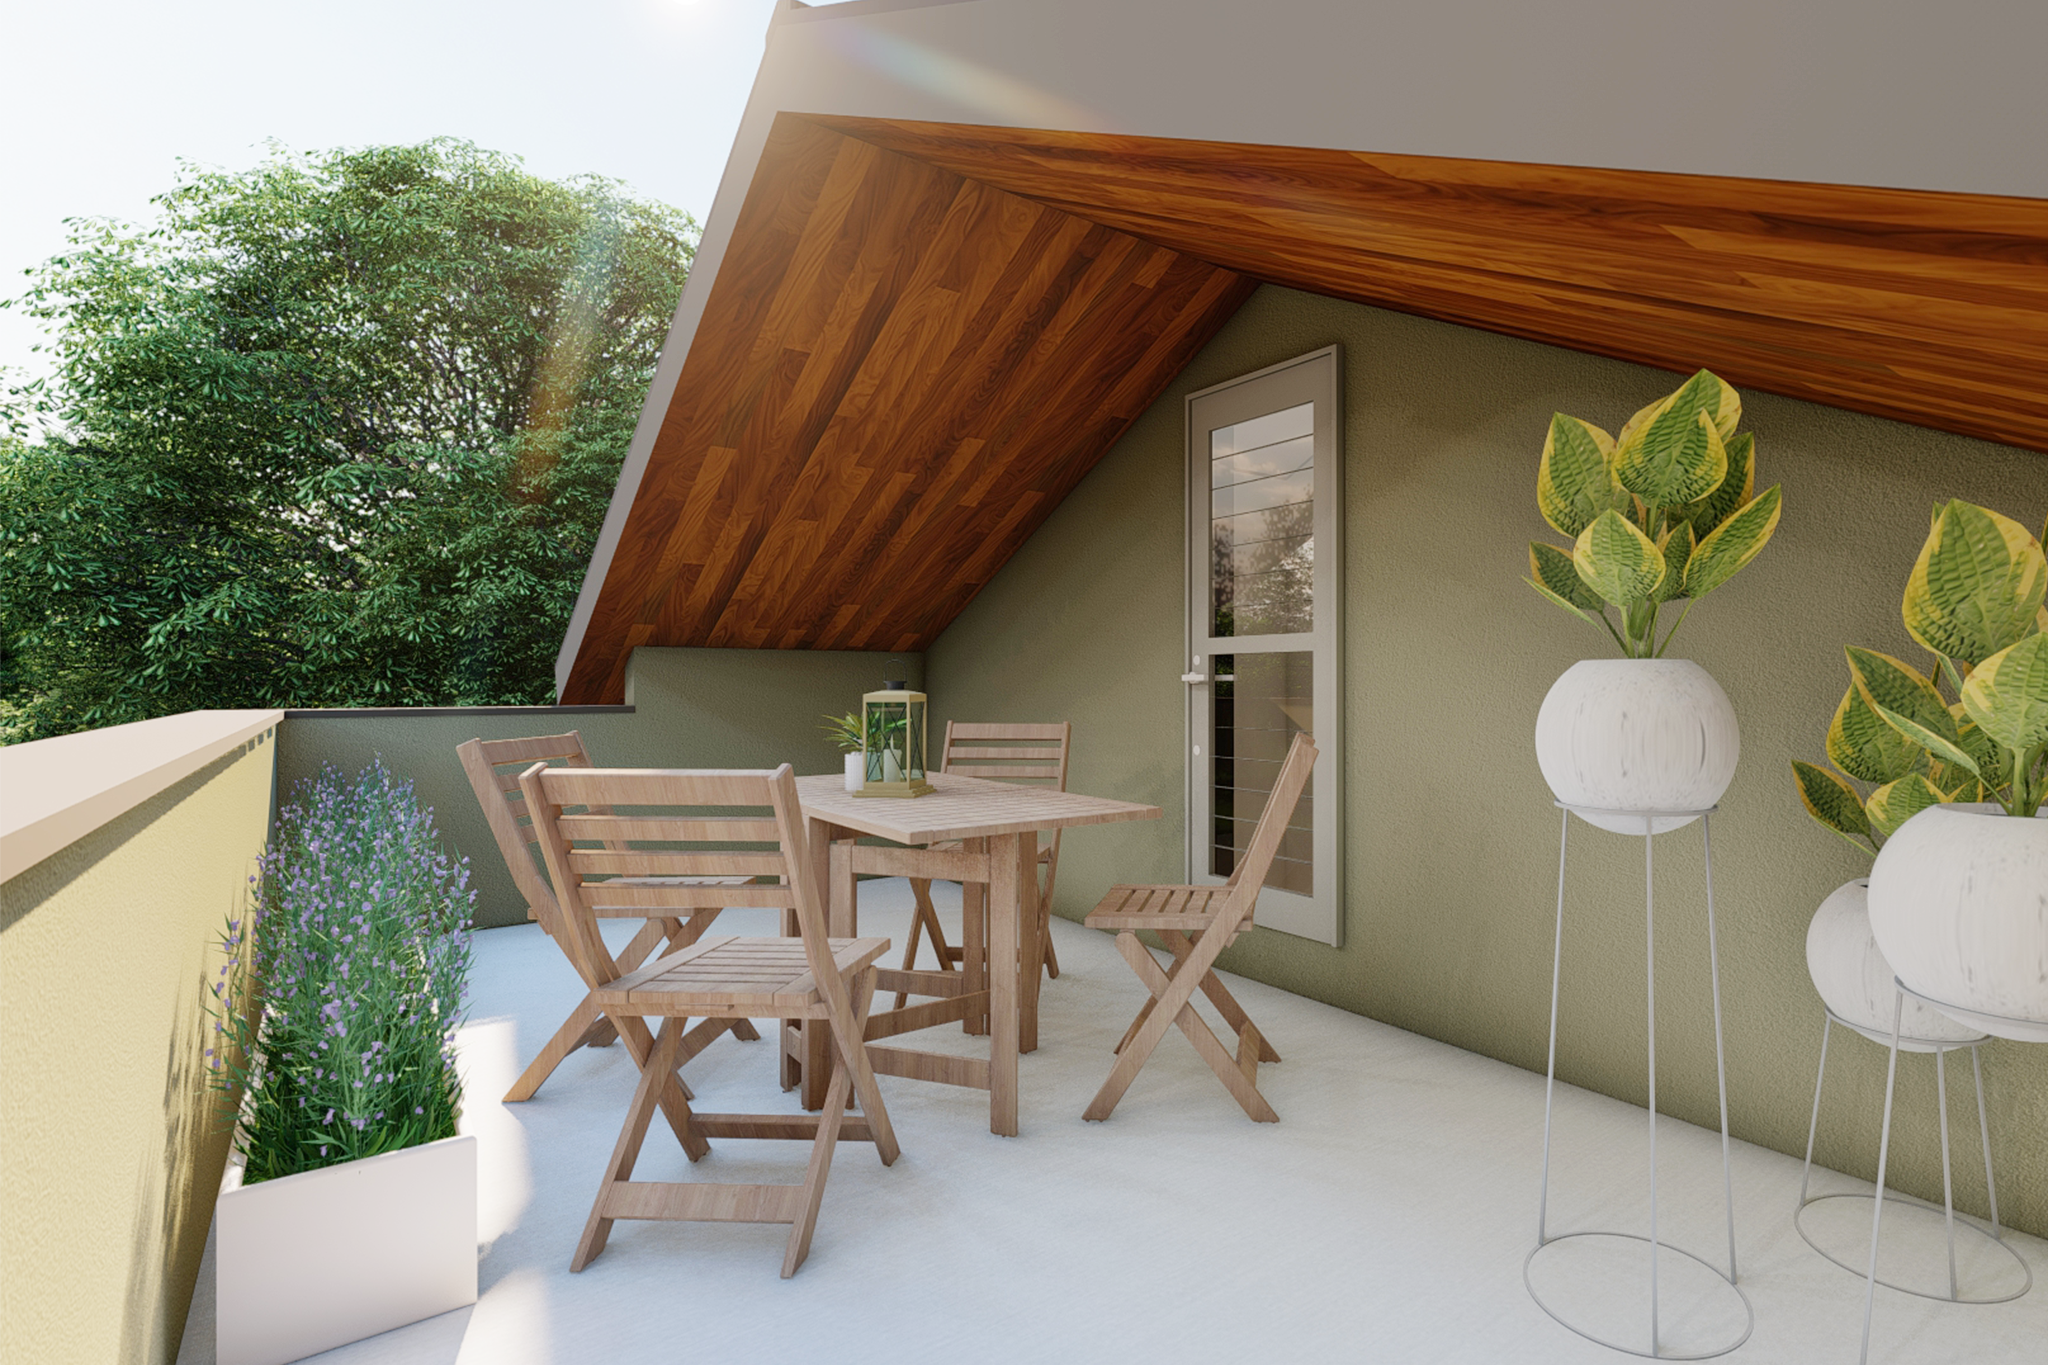 [sorano terrace]は、屋上テラスを楽しむ家 屋上に開放感たっぷりのテラスがある暮らし